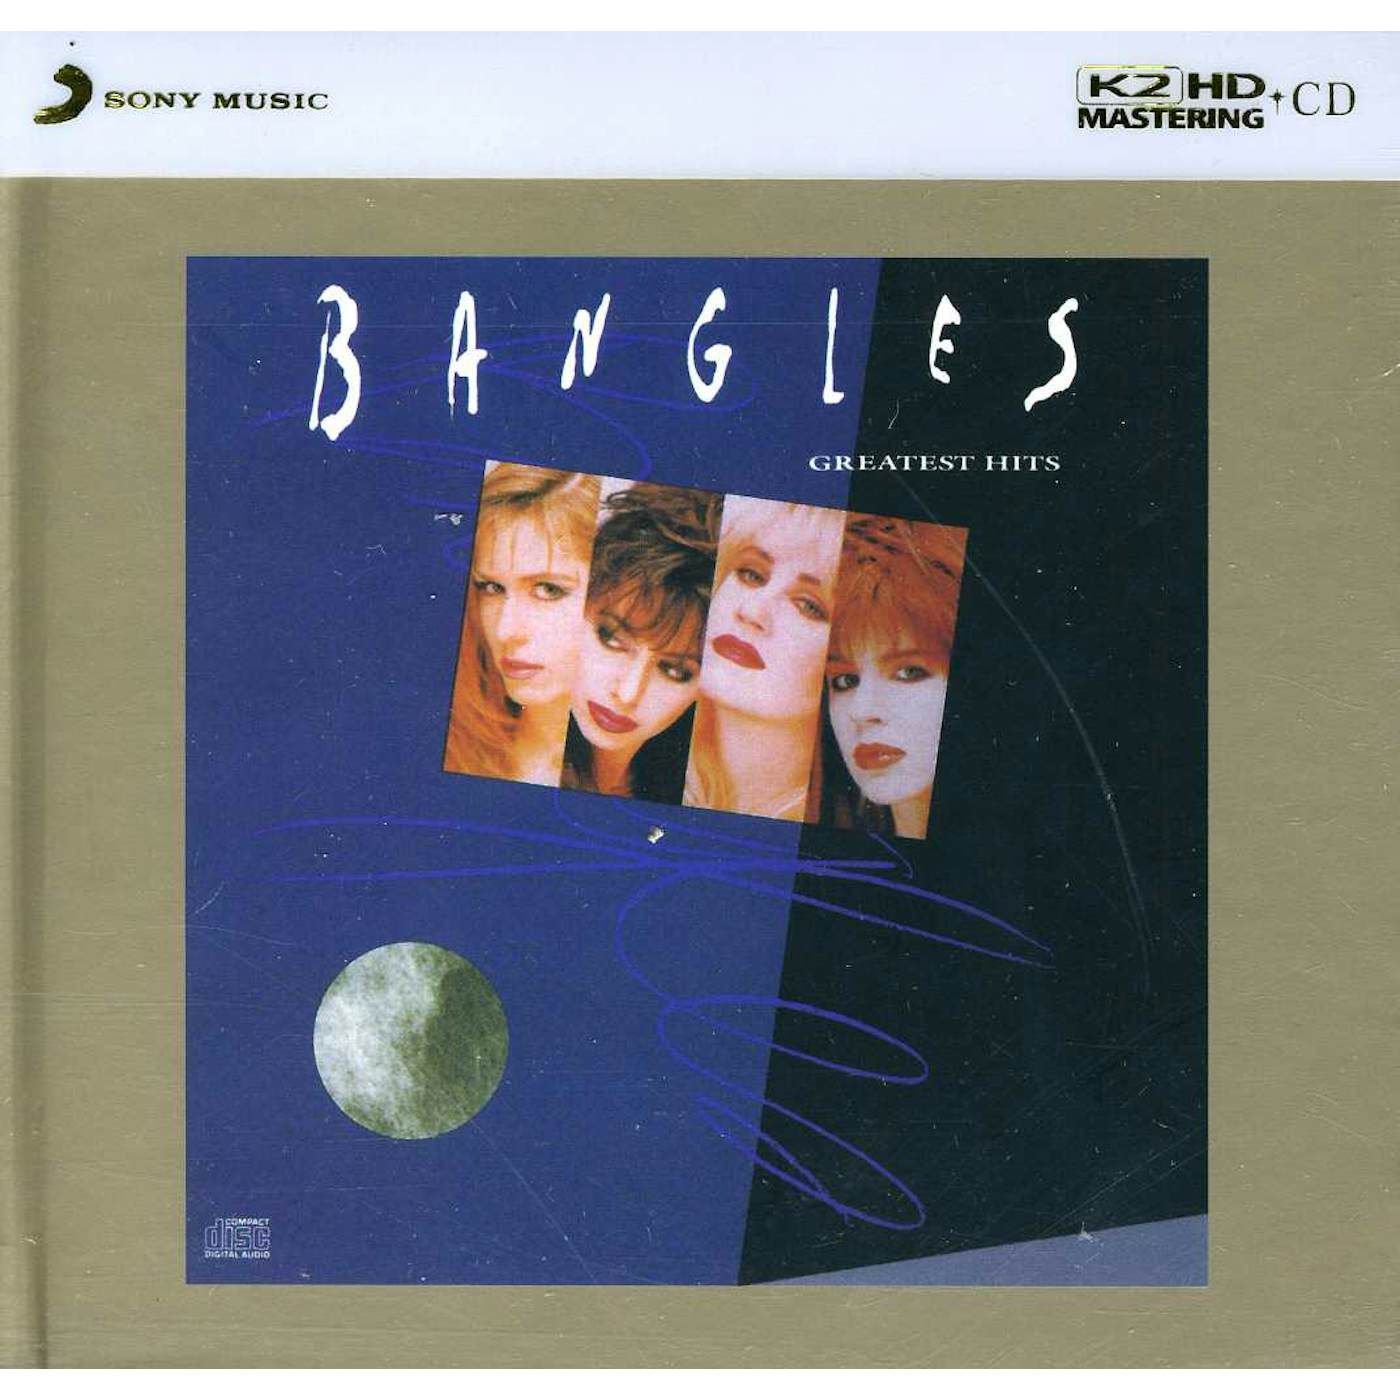 The Bangles GREATEST HITS: K2HD MASTERING CD